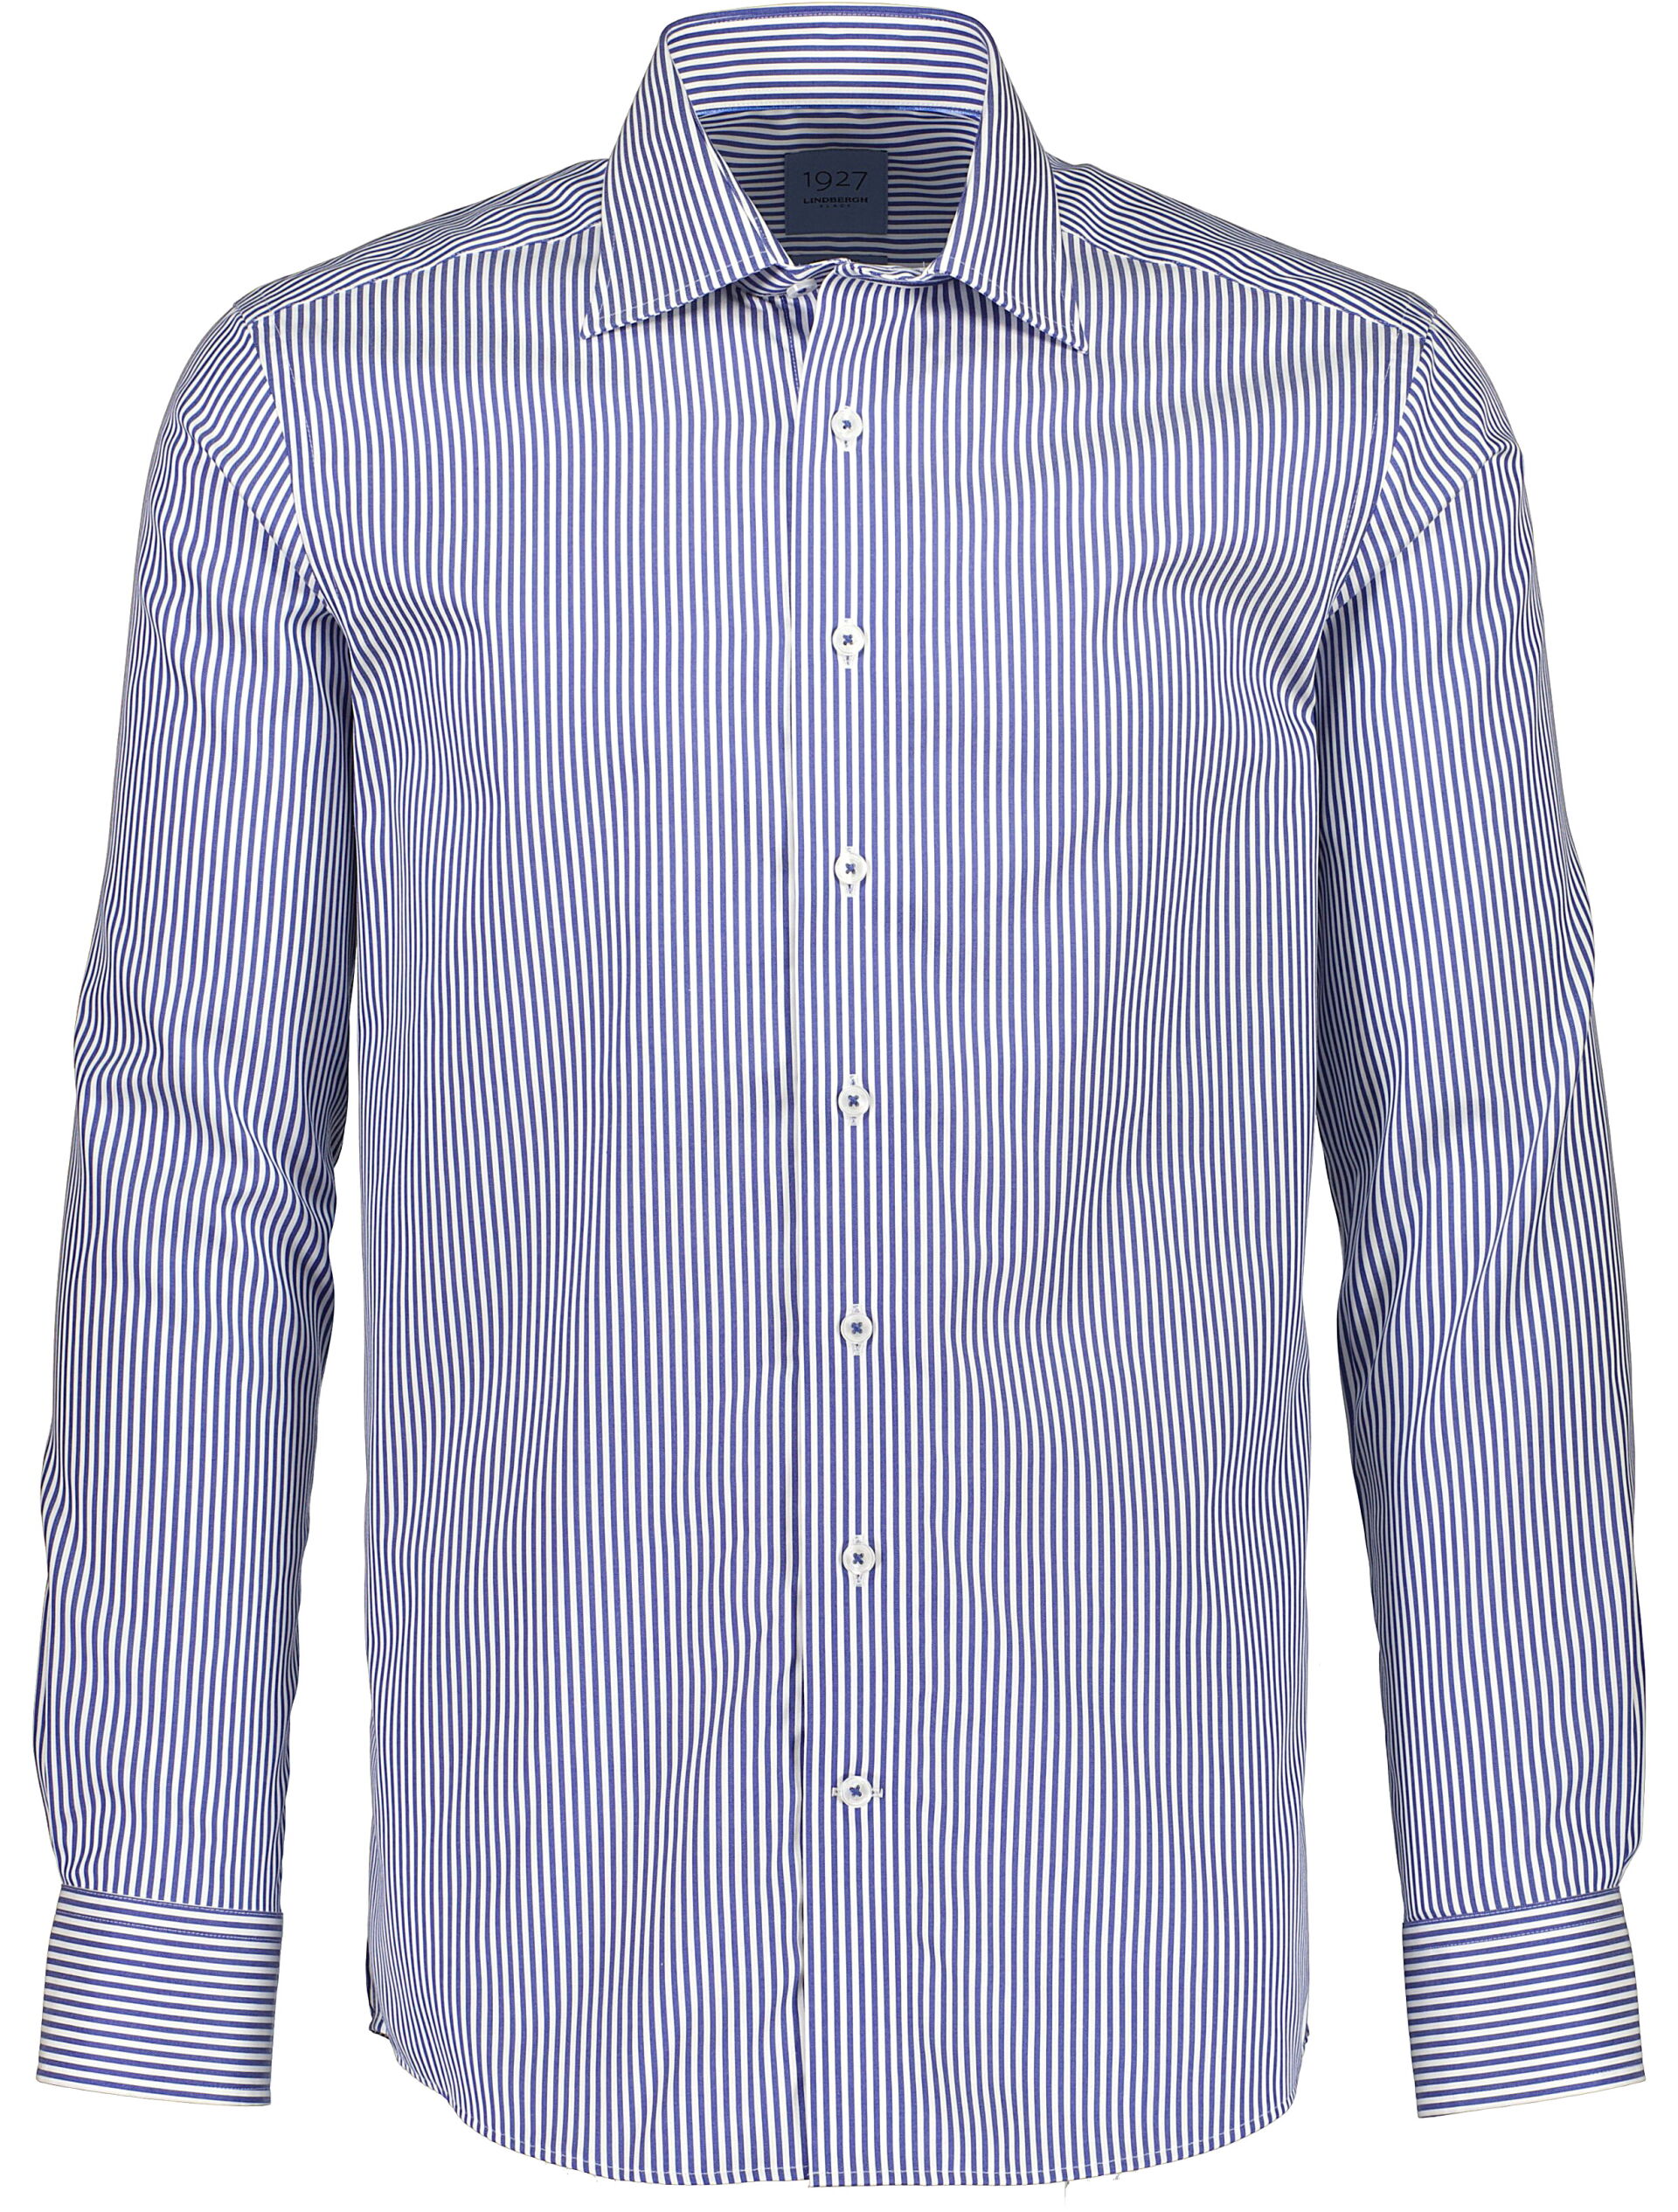 1927 Business casual shirt 30-247004